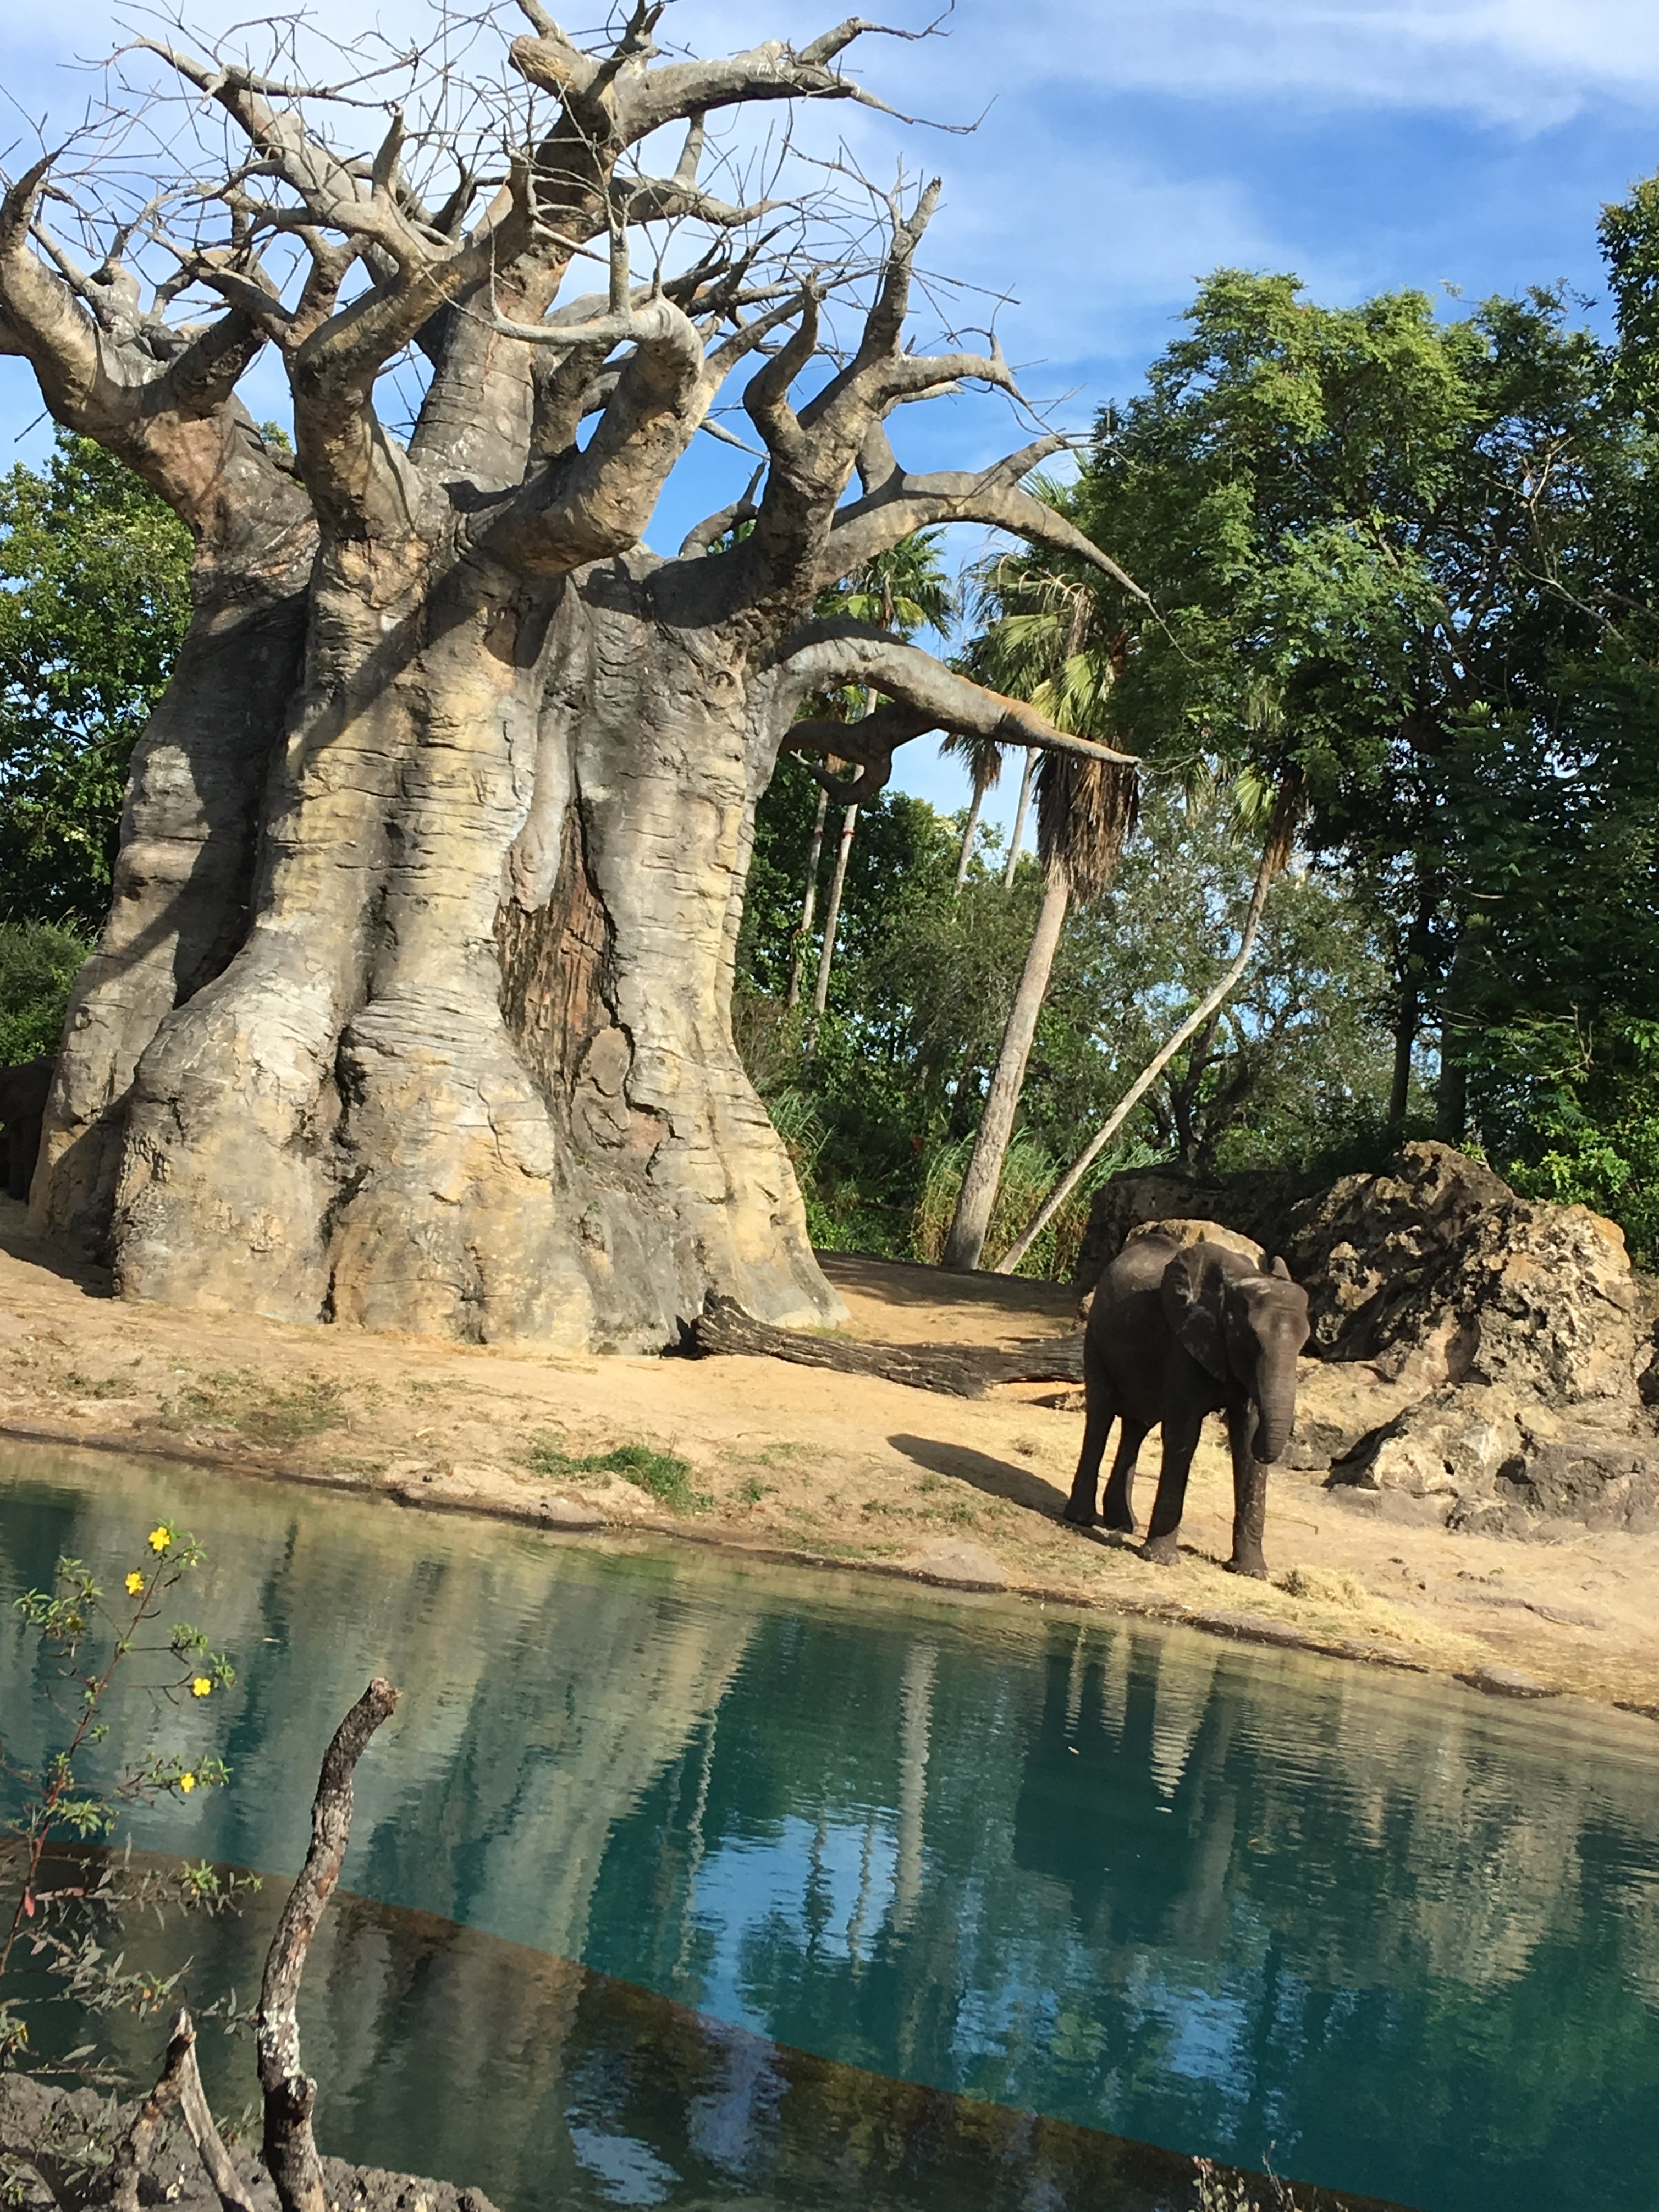 [WDW] elephant 象ゾウ/Kilimanjaro Safaris キリマンジャロ・サファリ/Disney's Animal kingdomアニマル・キングダム/Walt Disney World Resort ディズニー・ワールド・リゾート 旅行記/(2018/11/1)  #旅行 #trip #動物 #animal #象 #elephant #ディズニー #wdw #Disney #FIRE #早期リタイア